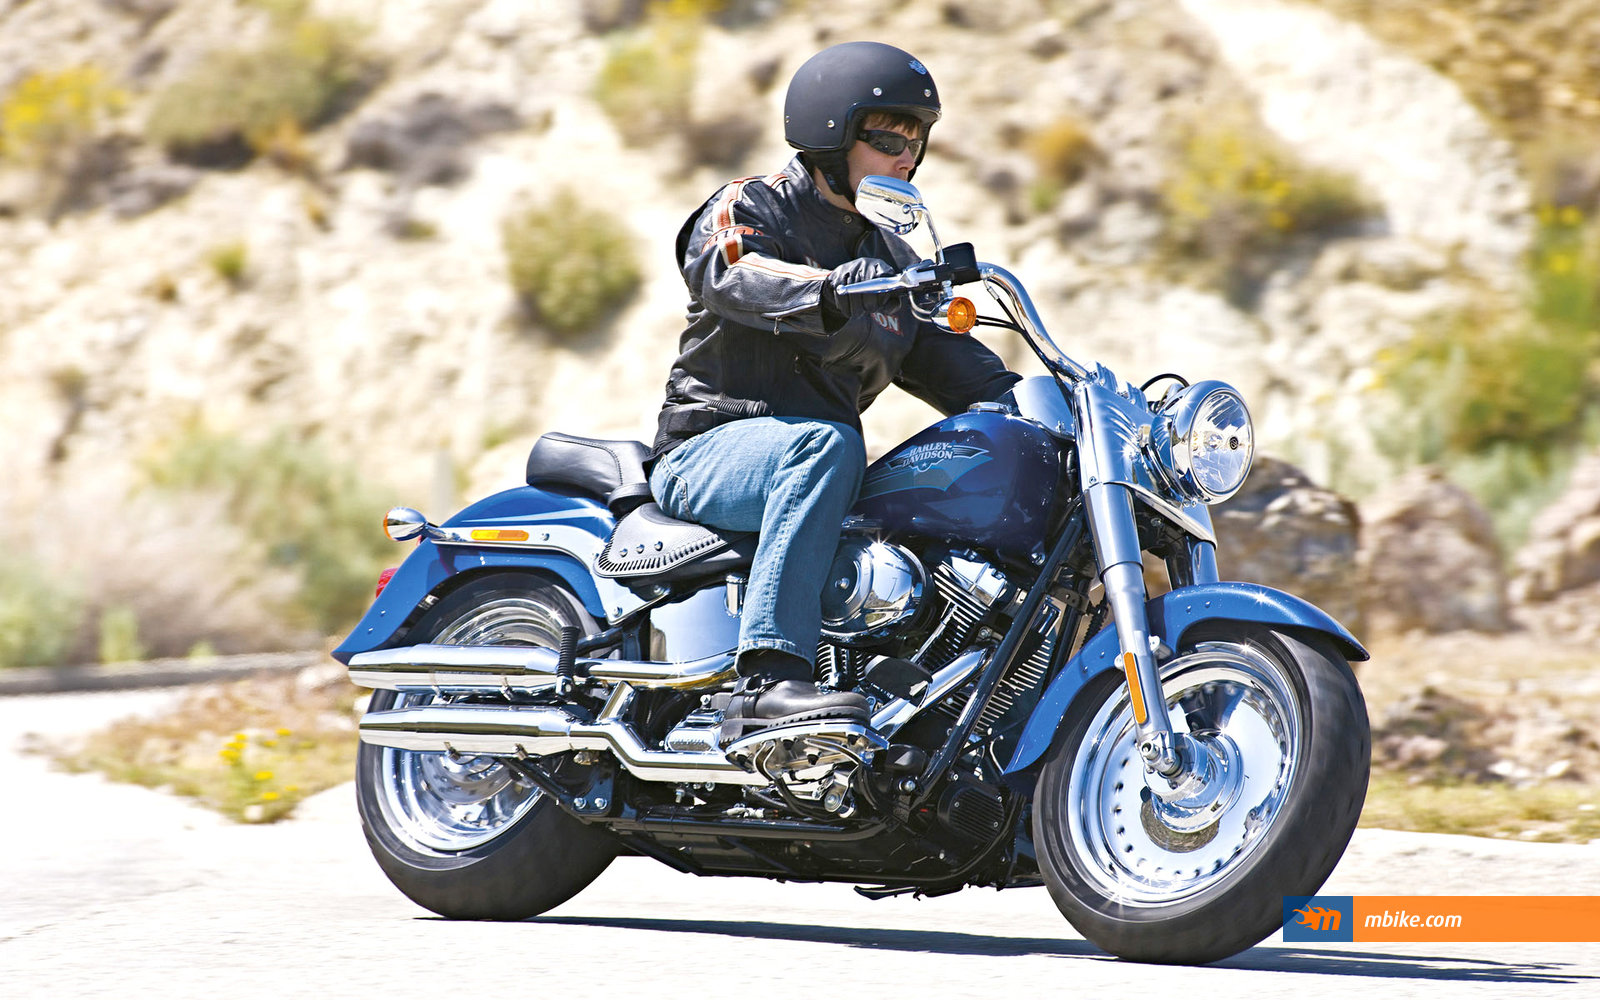 2009 Harley-Davidson FLSTF Fat Boy